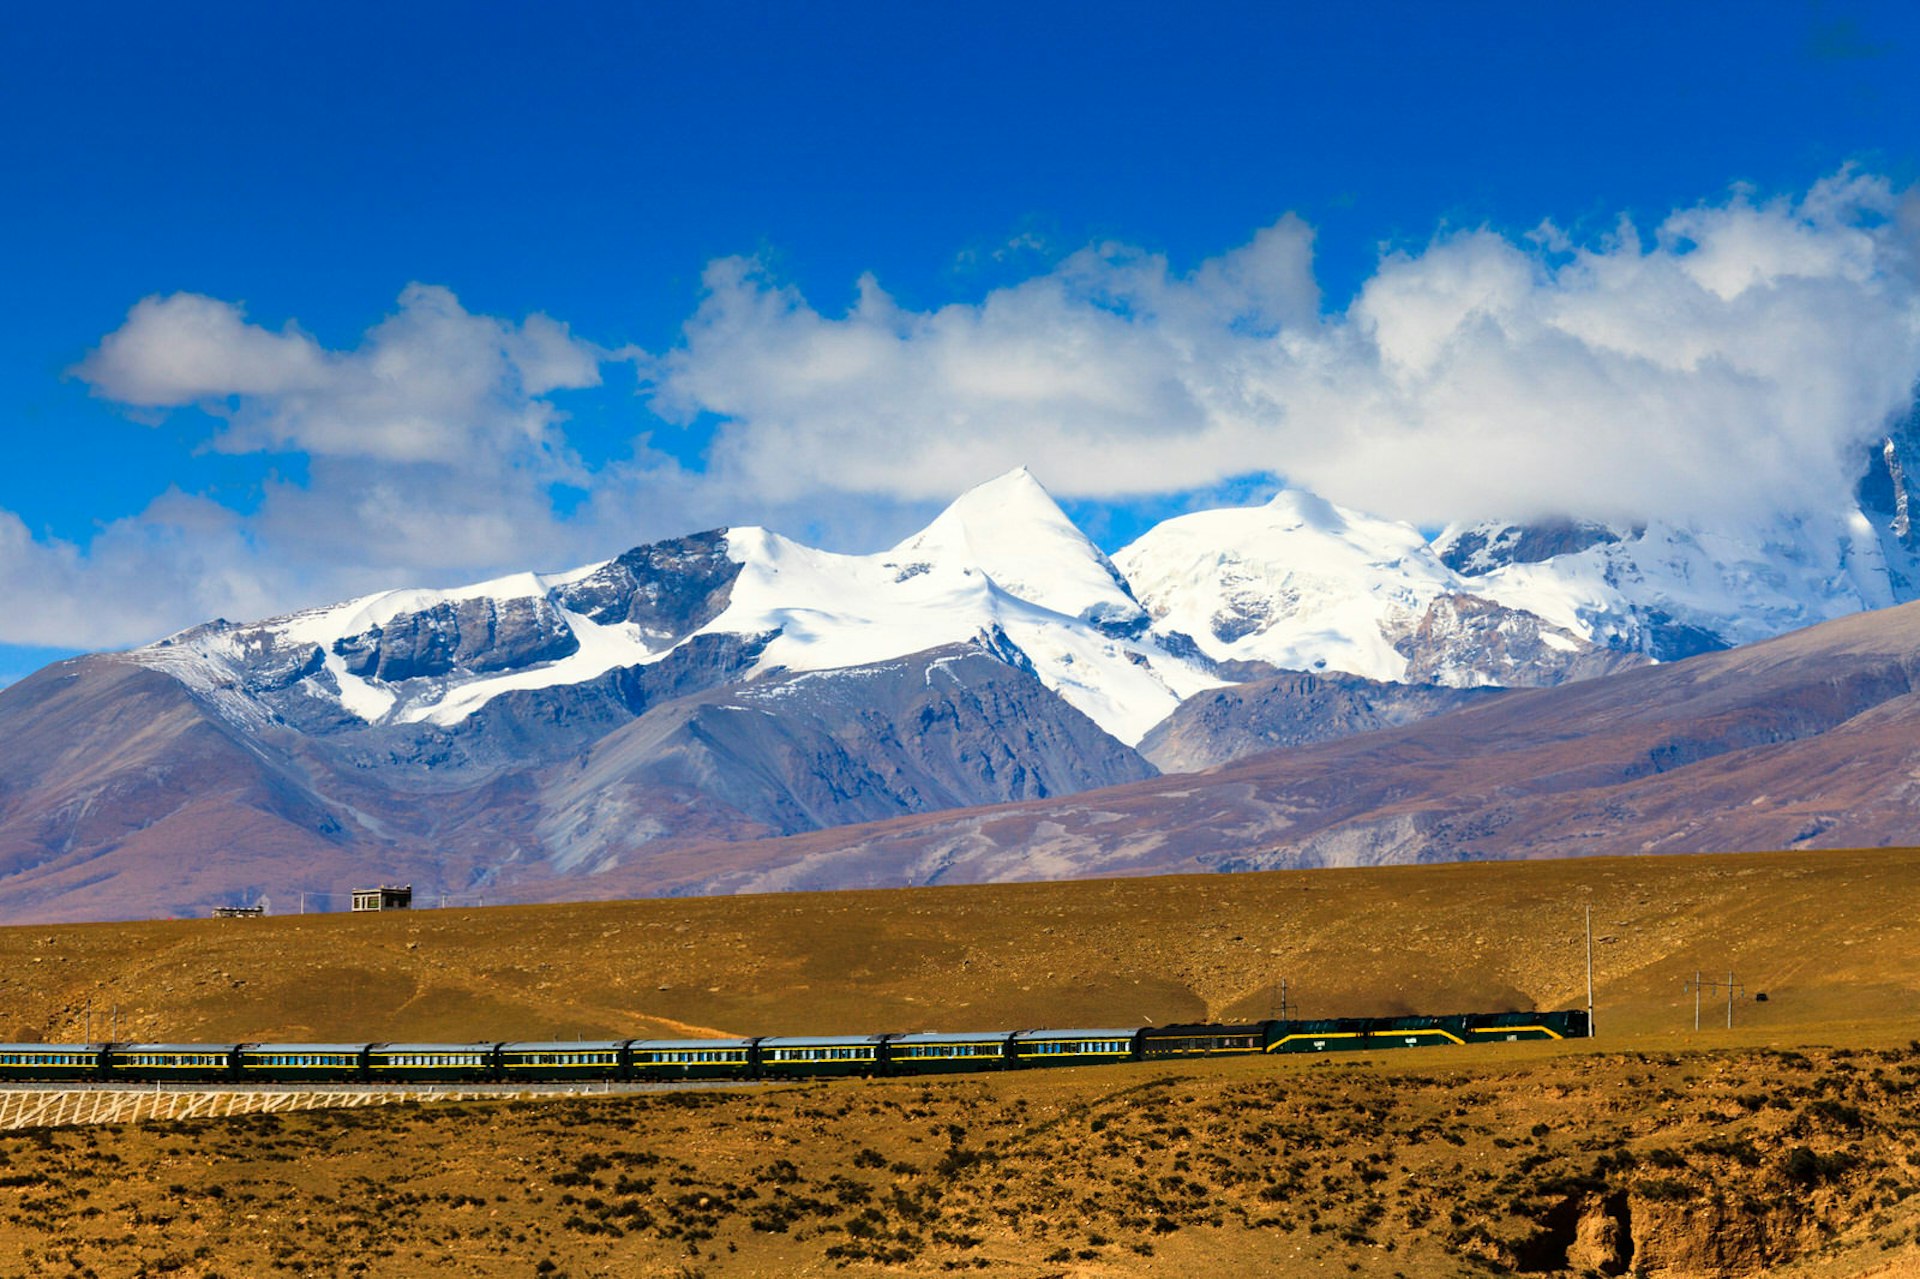 A train passes through the Himalayas © Philip Yuan / Shutterstock